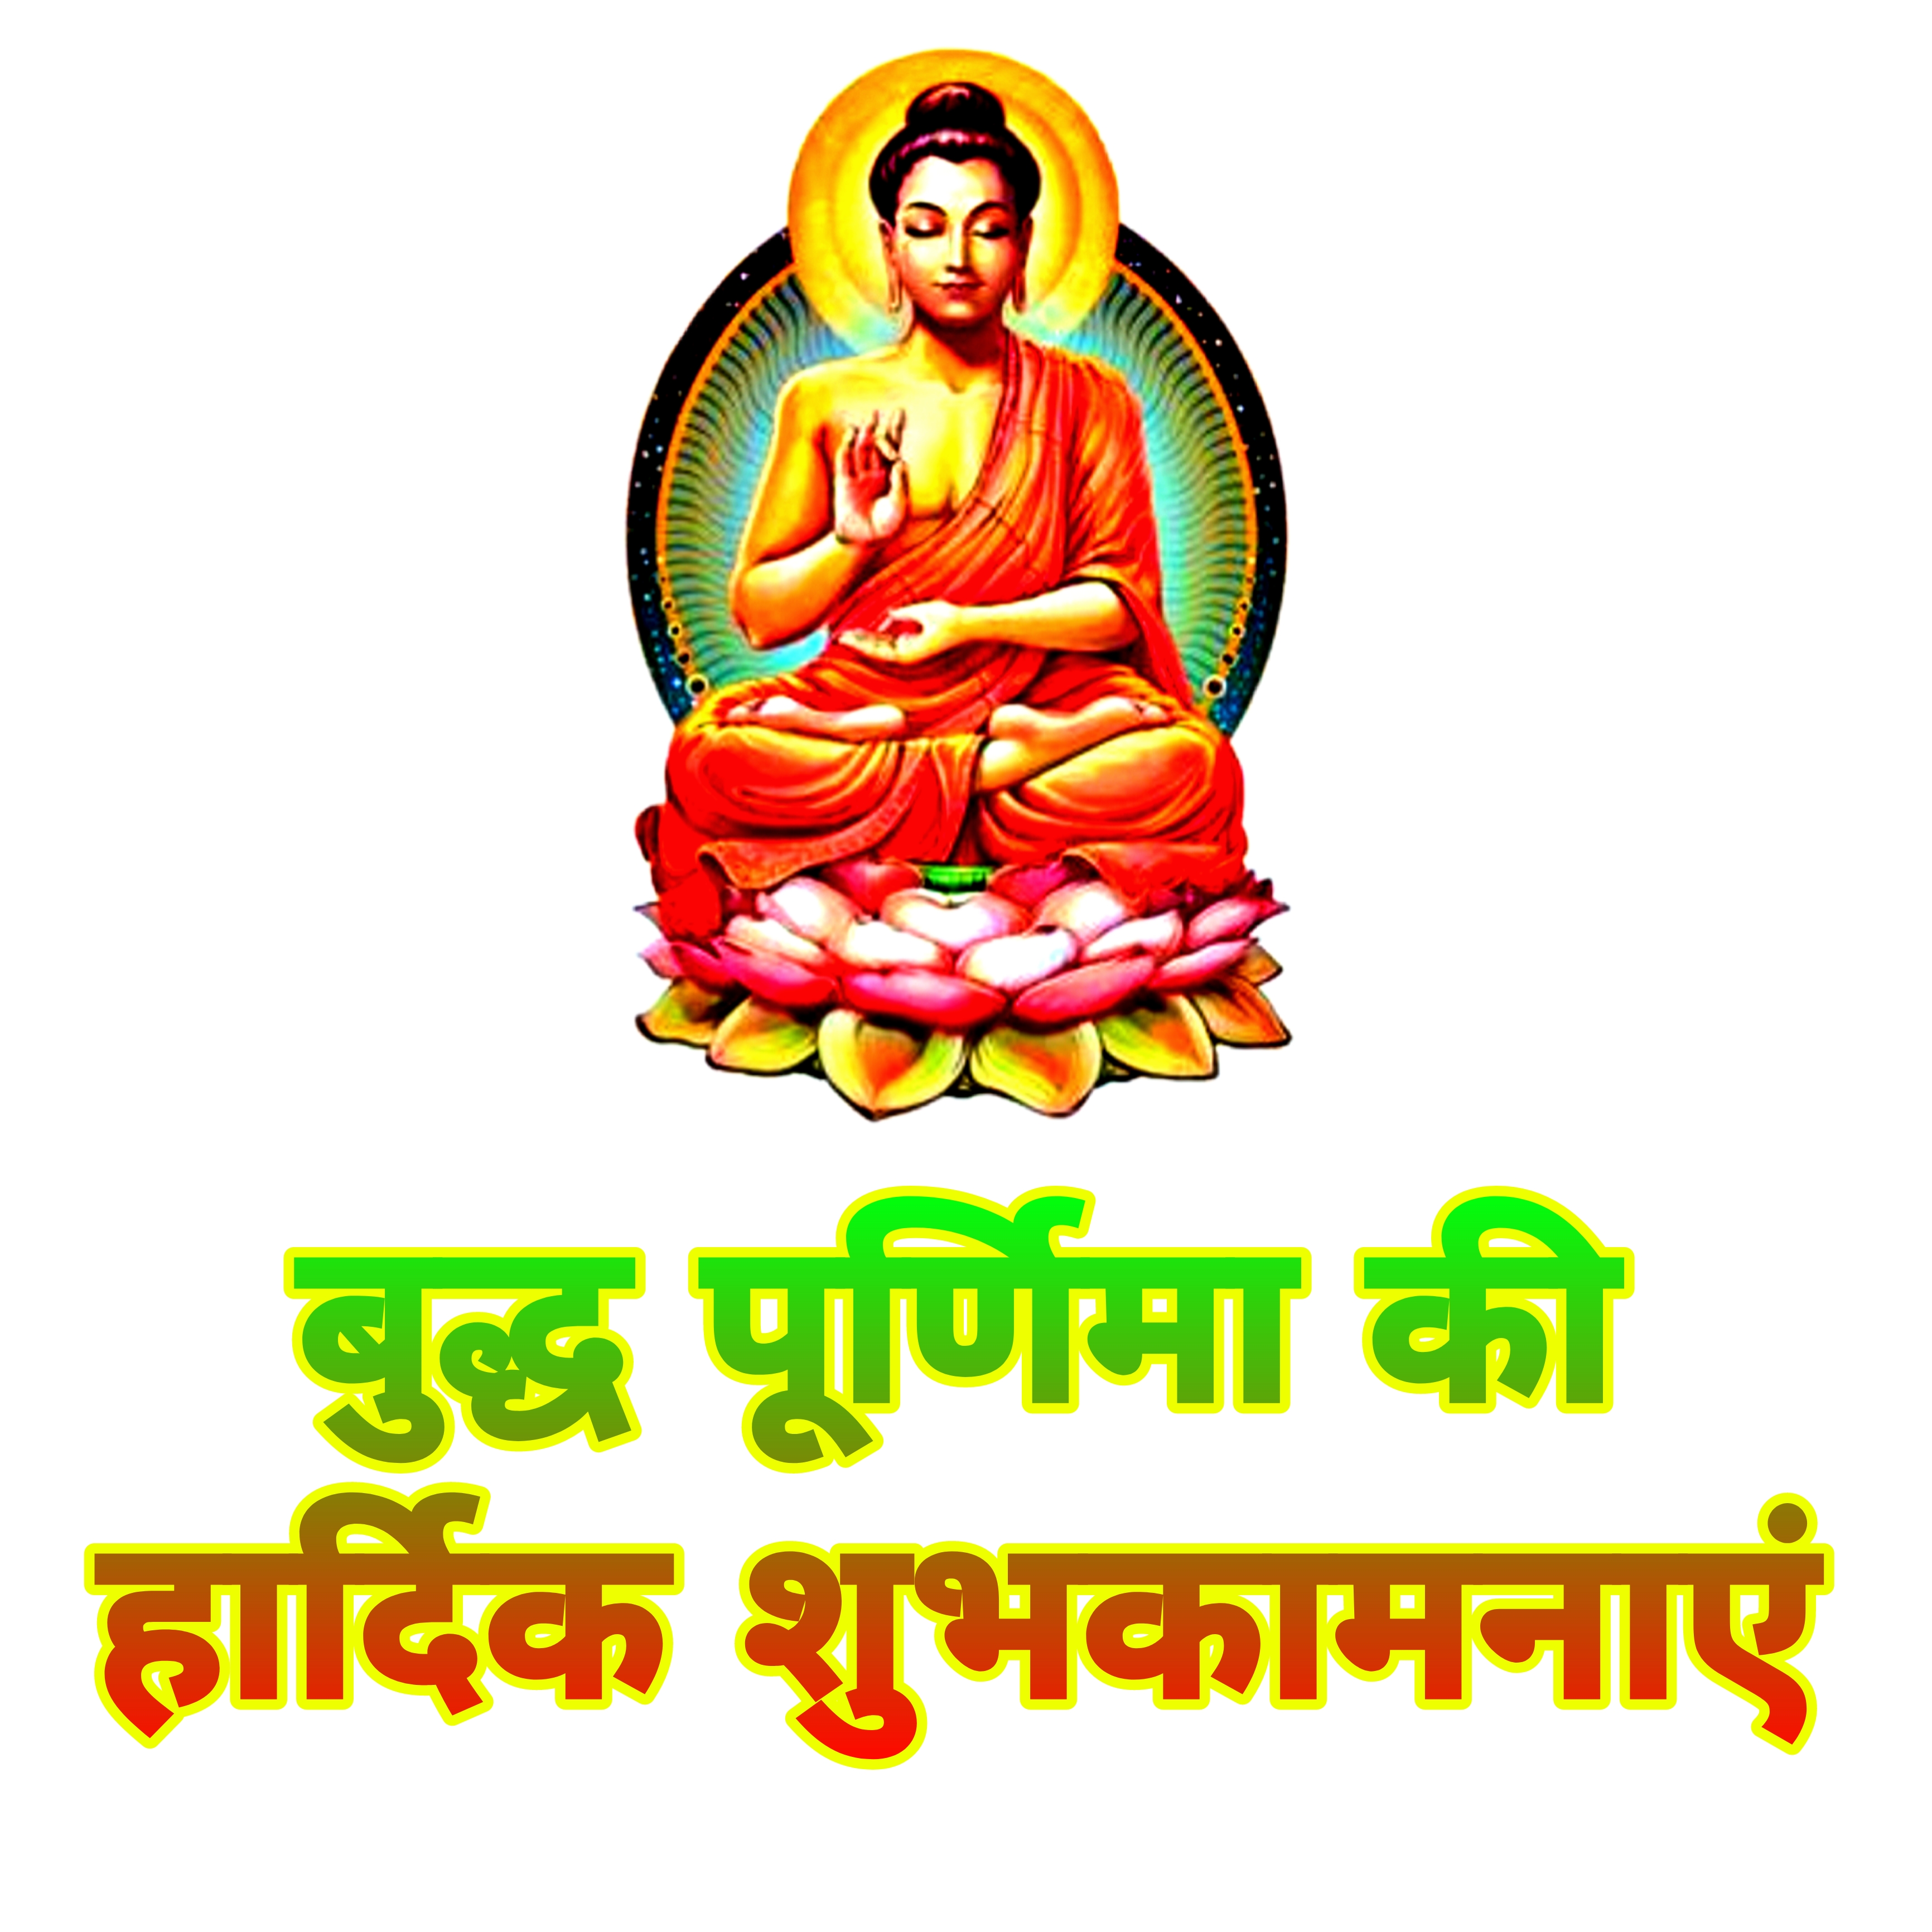 बुद्ध पूर्णिमा की हार्दिक शुभकामनाएं | Happy buddha purnima images | Buddha purnima ki hardik shubhkamnaye | Buddha purnima wallpaper